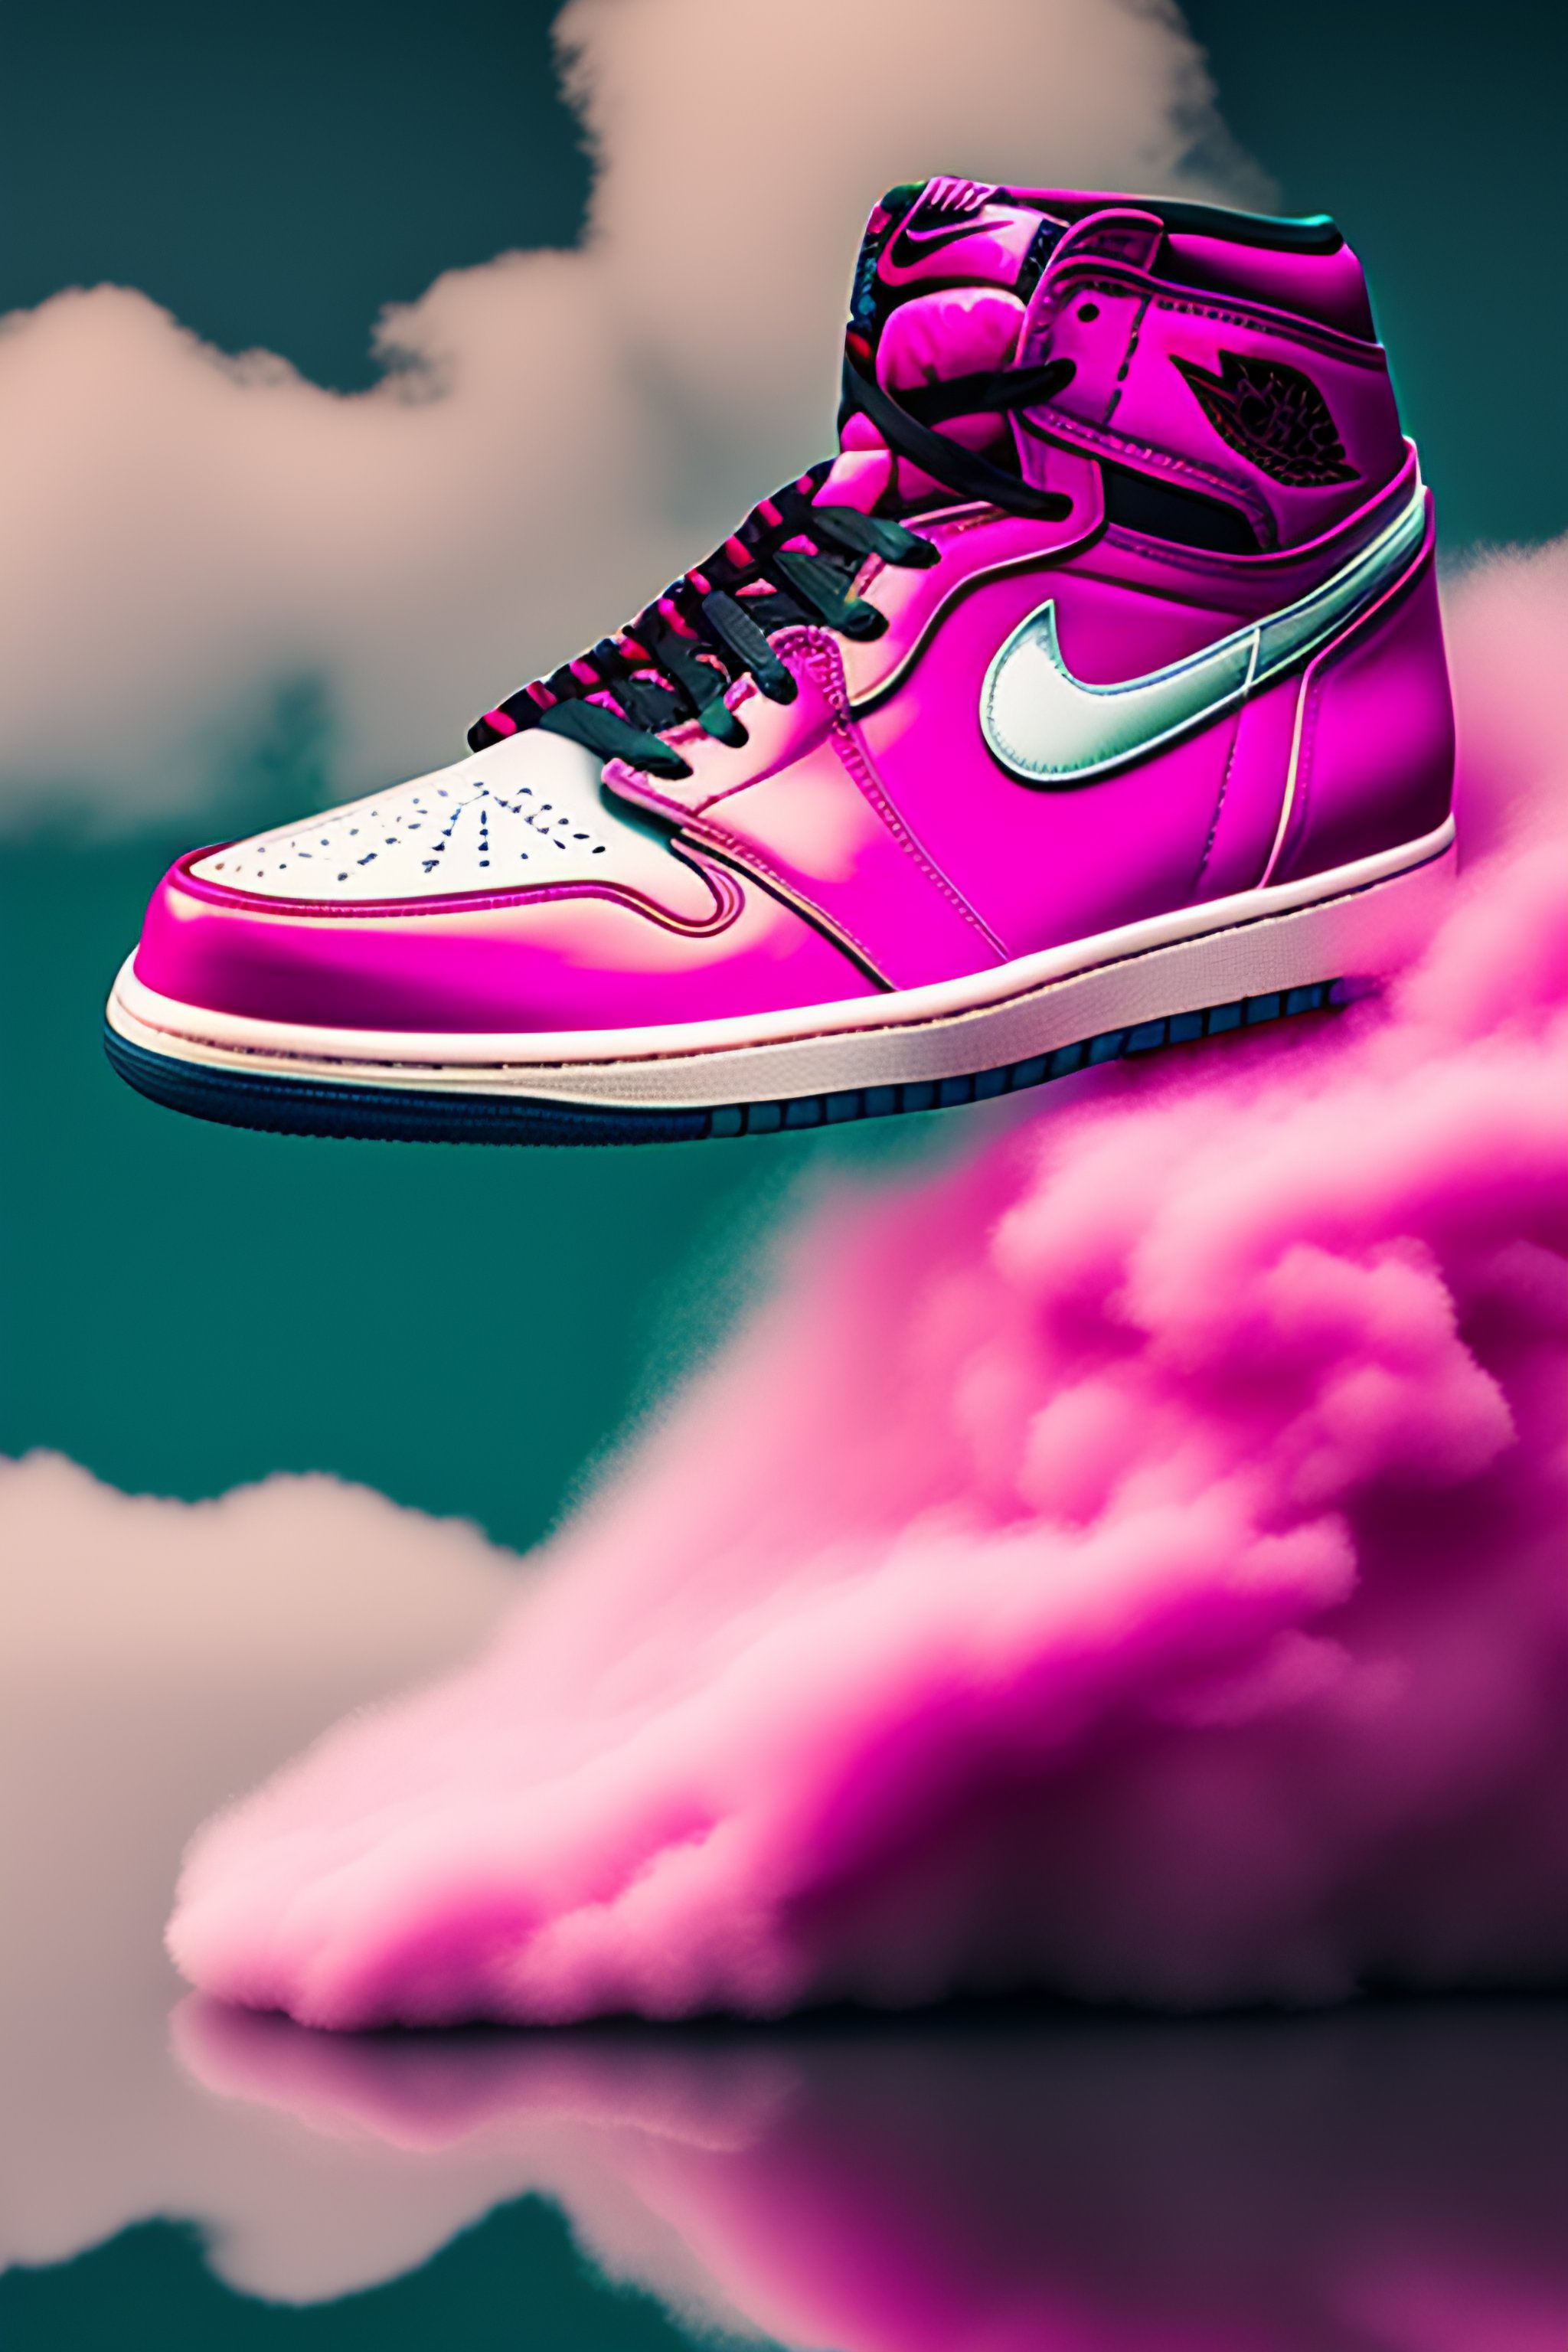 Nike jordan 1 chicago colorway, pink